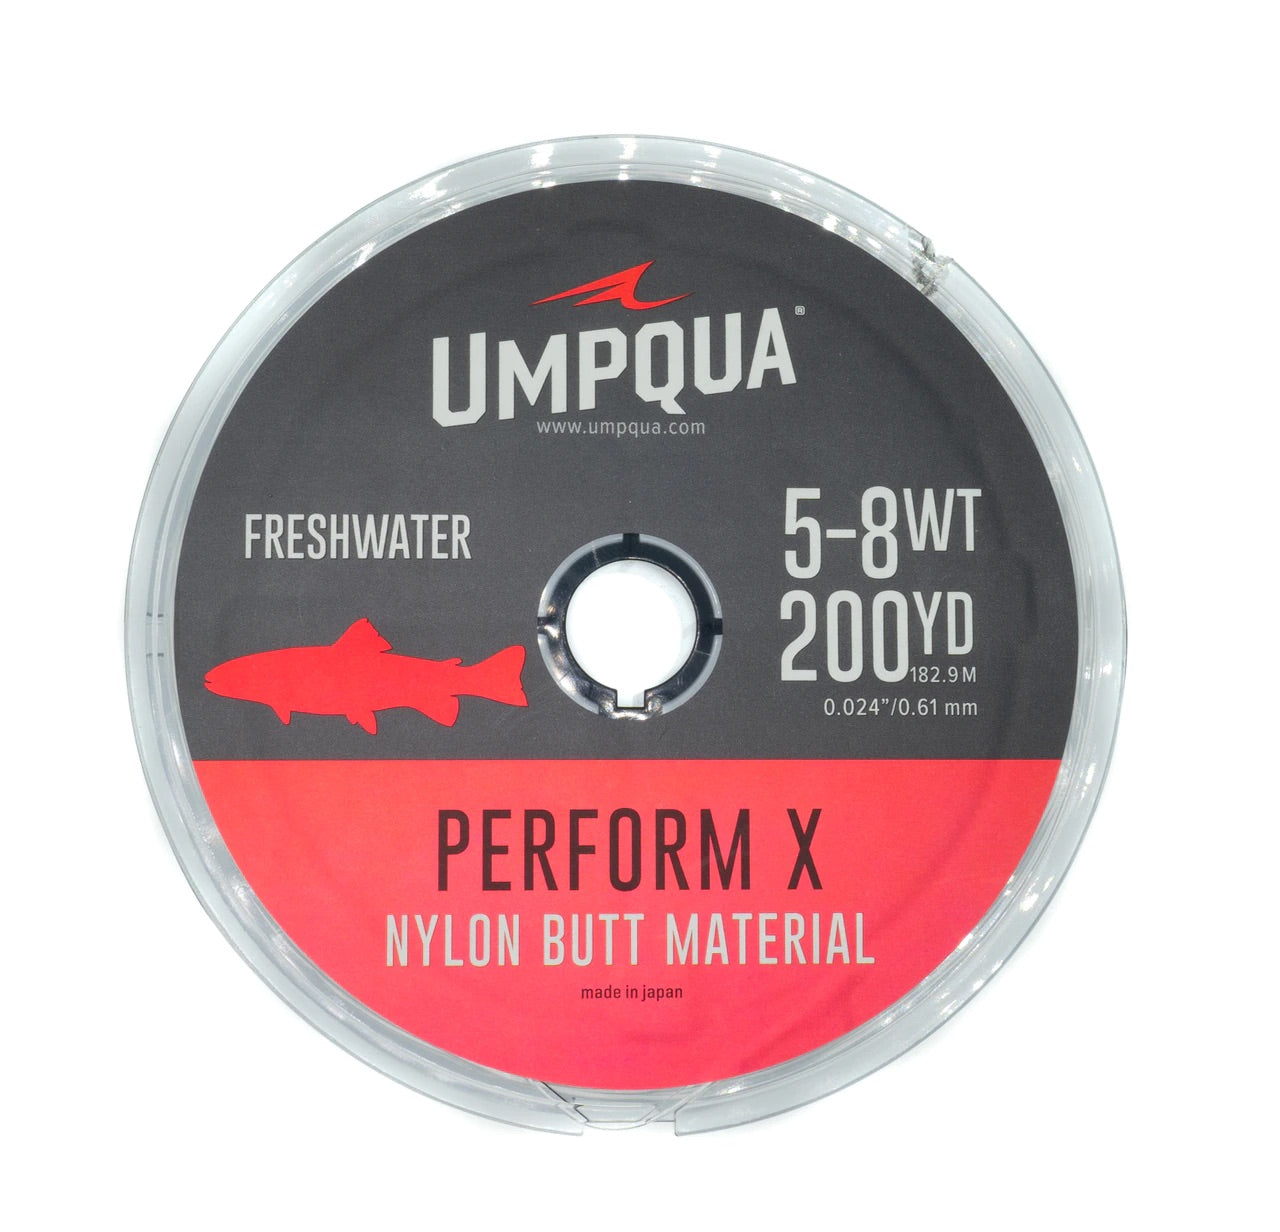 Umpqua Perform X Nylon Butt Material